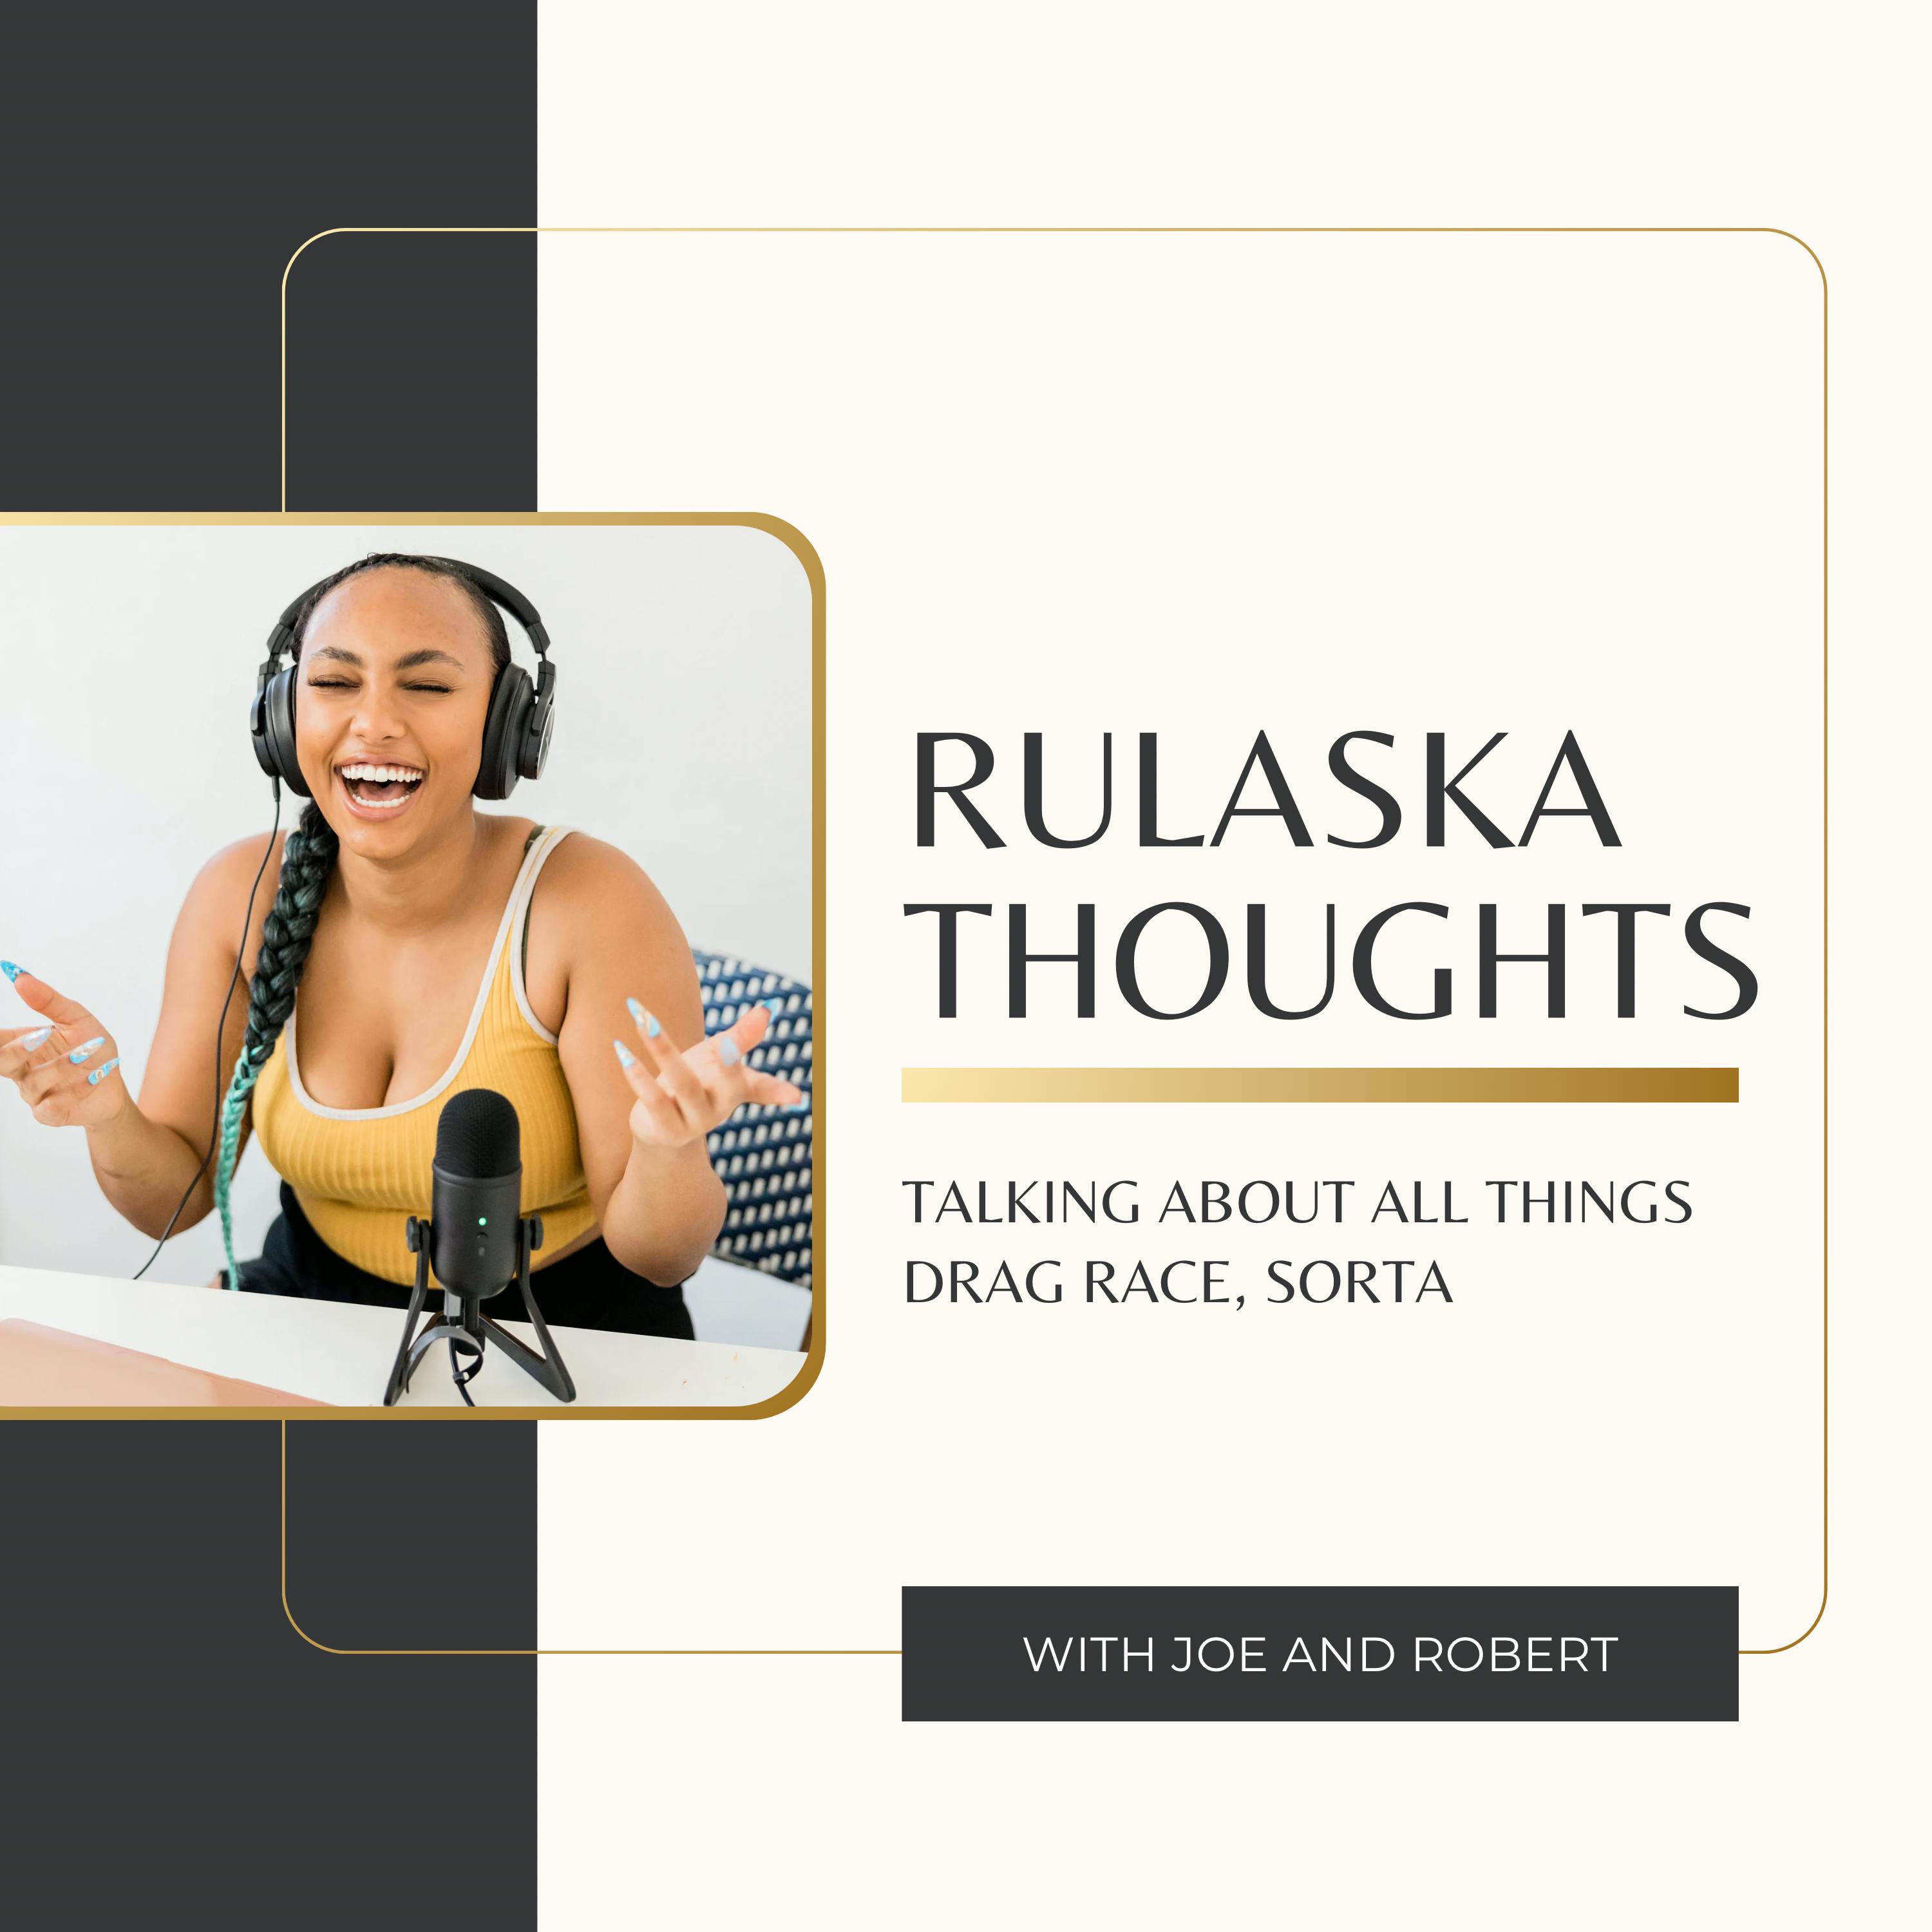 RulaskaThoughts: All Stars 9. Episode 6.